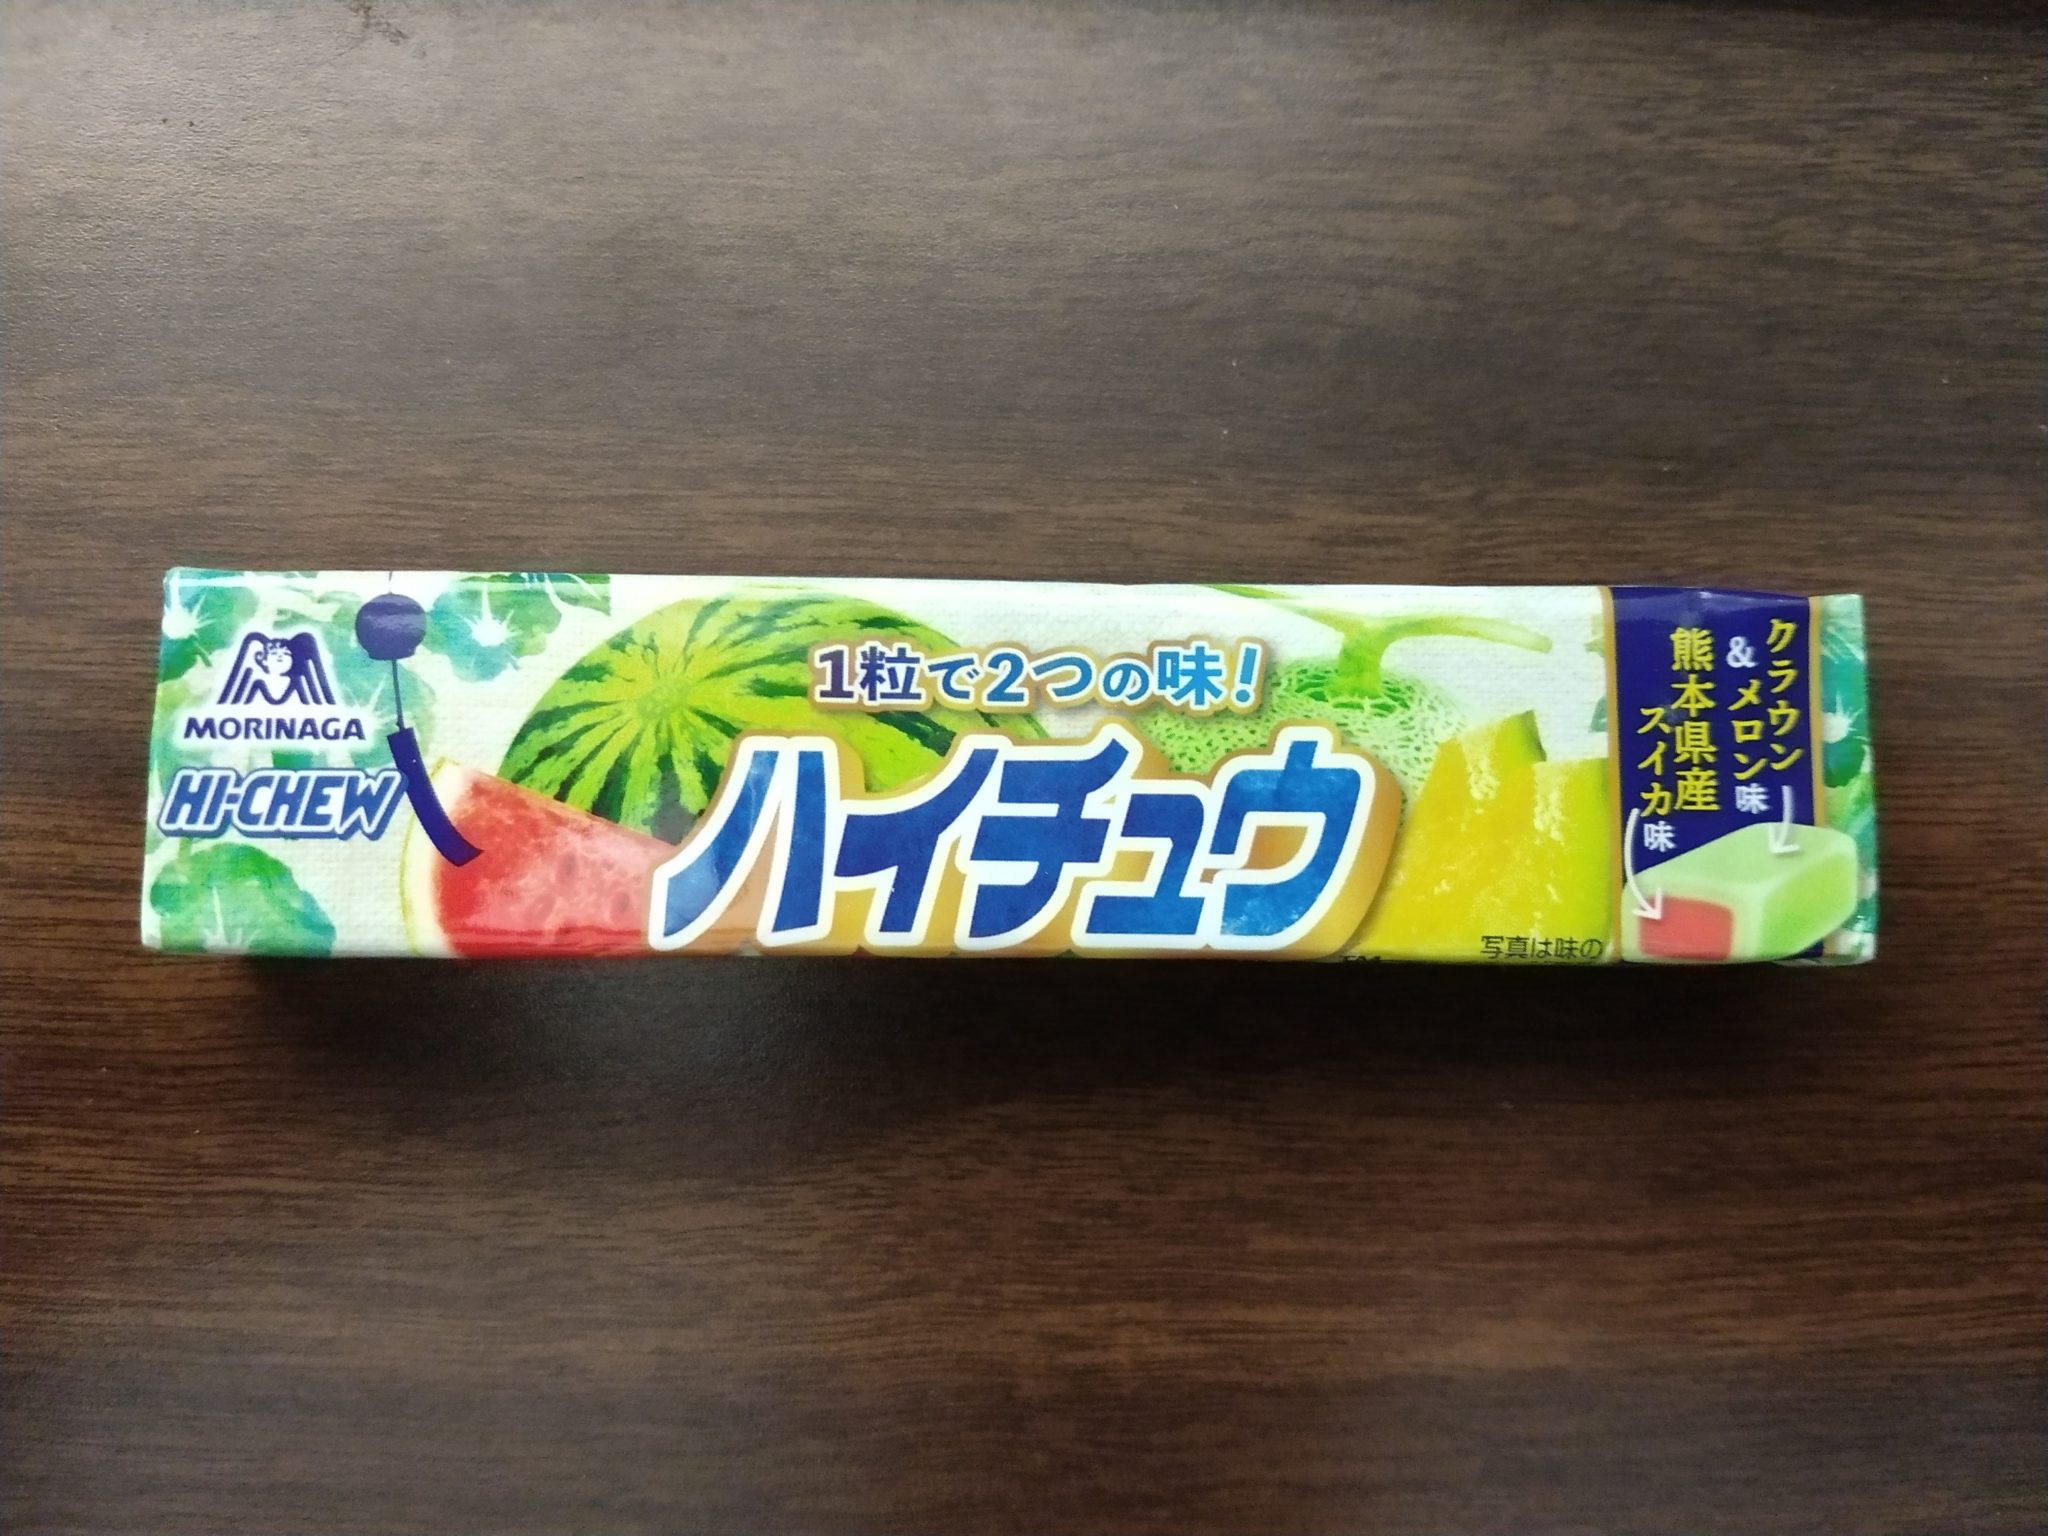 Hi-Chew Doubles – Watermelon and Melon